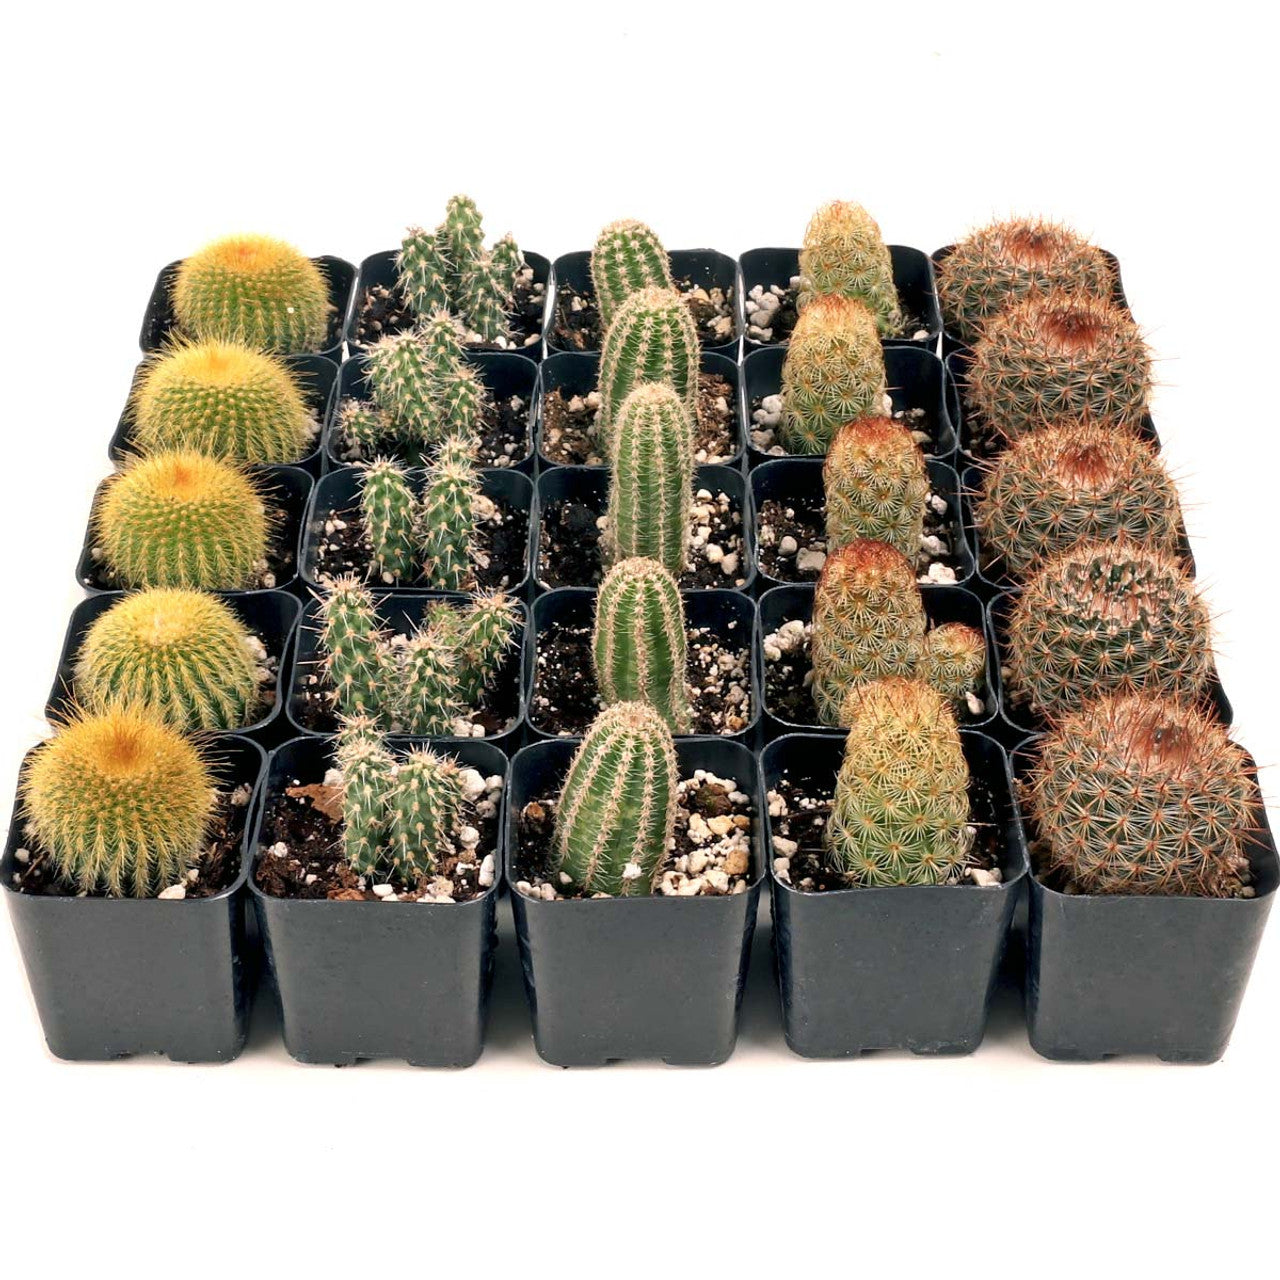 Cactus 25-Pack - 5 Varieties - 2" Pots